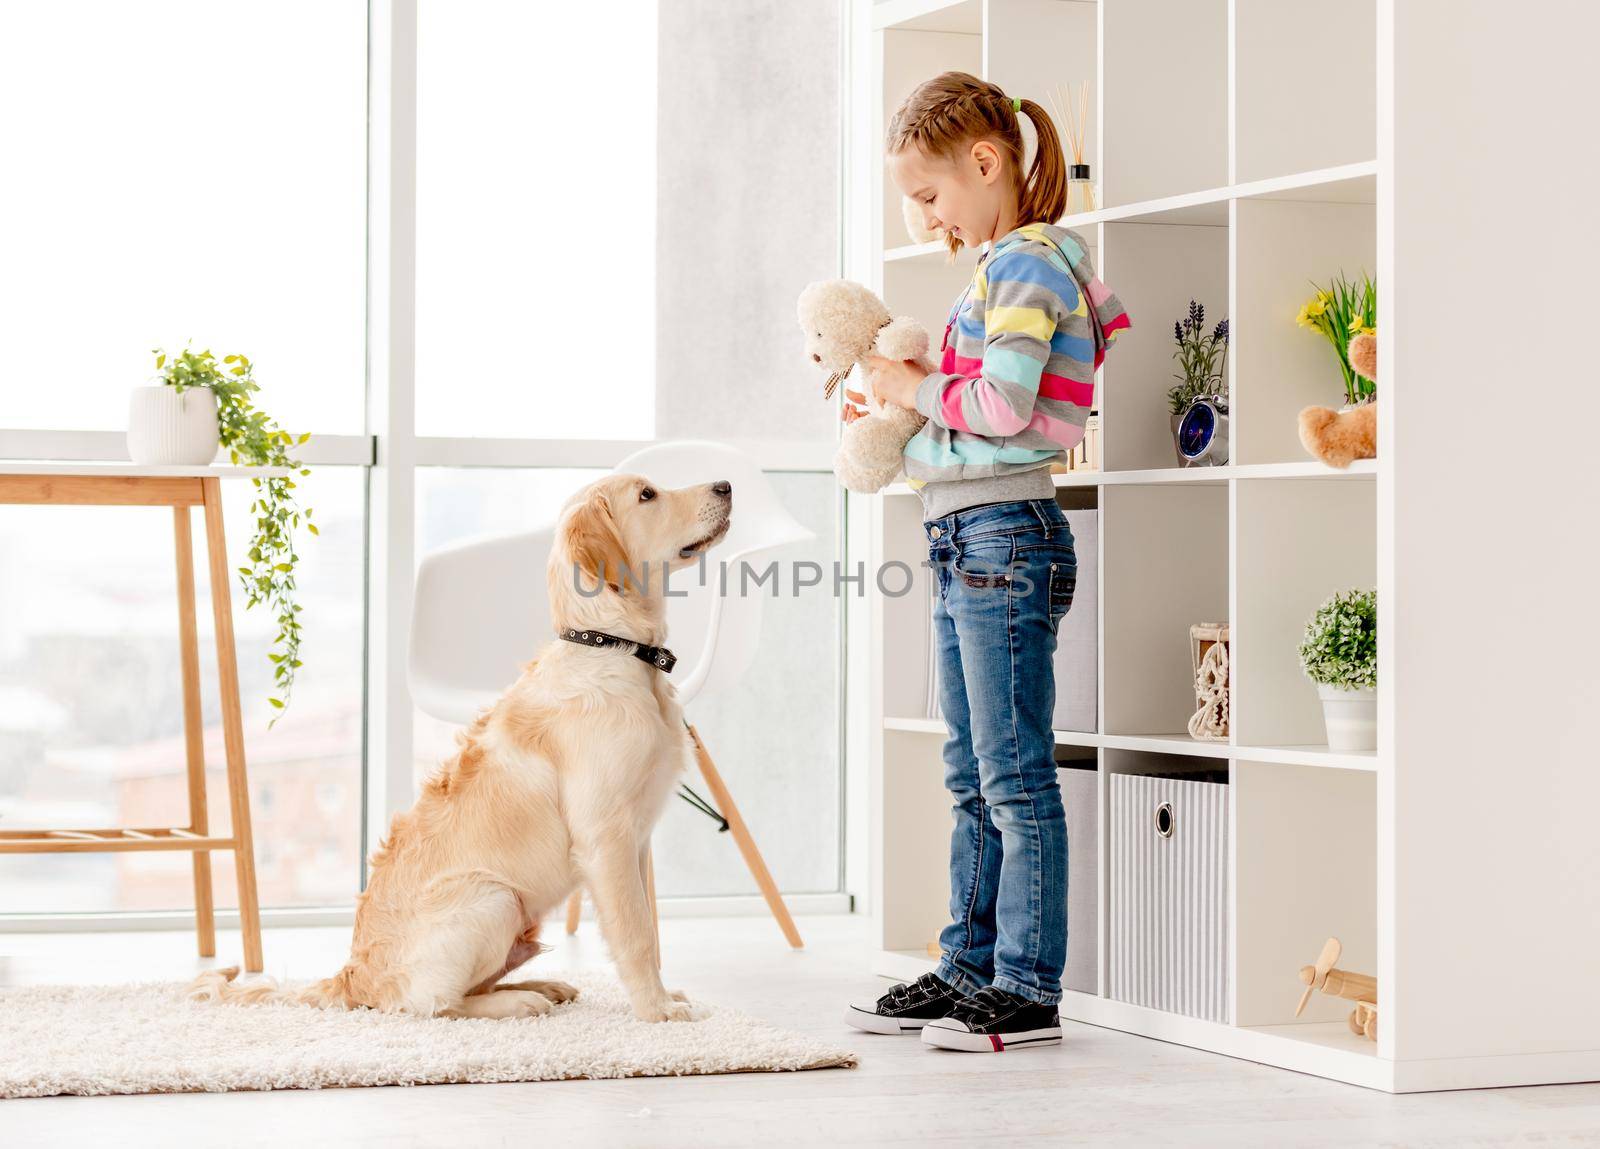 Girl showing teddy bear to dog by tan4ikk1